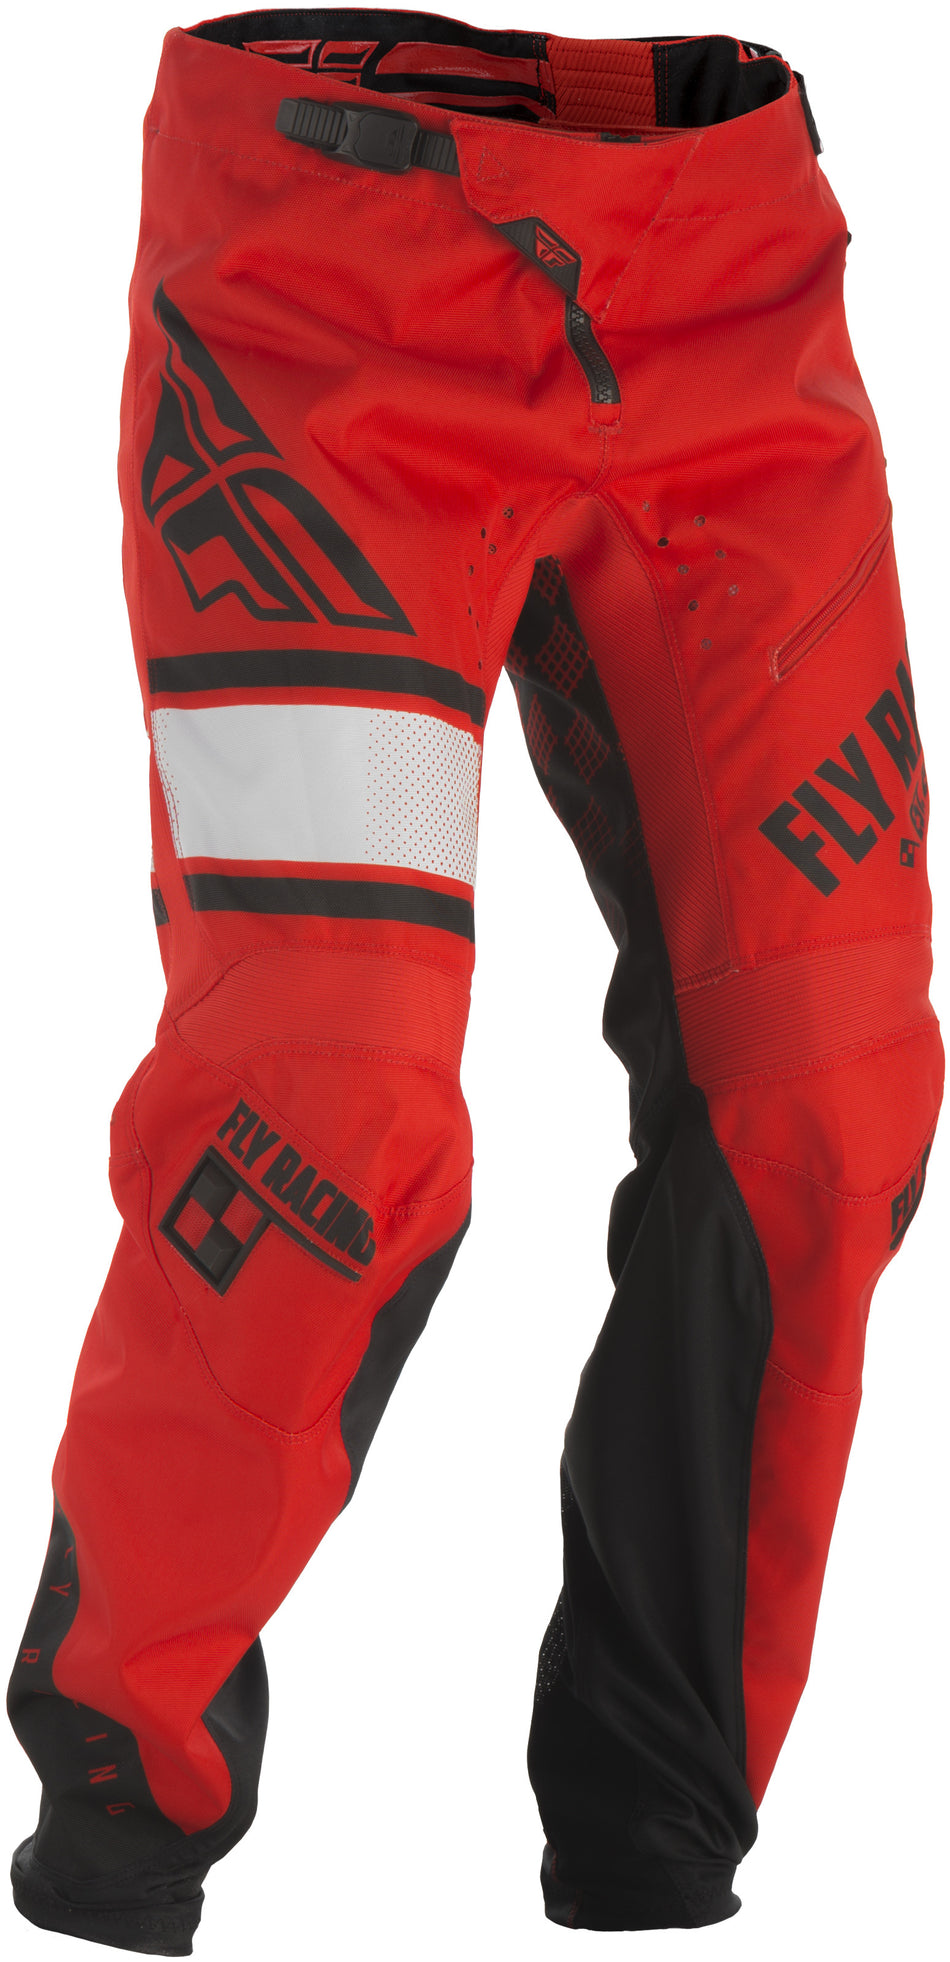 FLY RACING Kinetic Era Bicycle Pants Red/Black Sz 30 371-02230